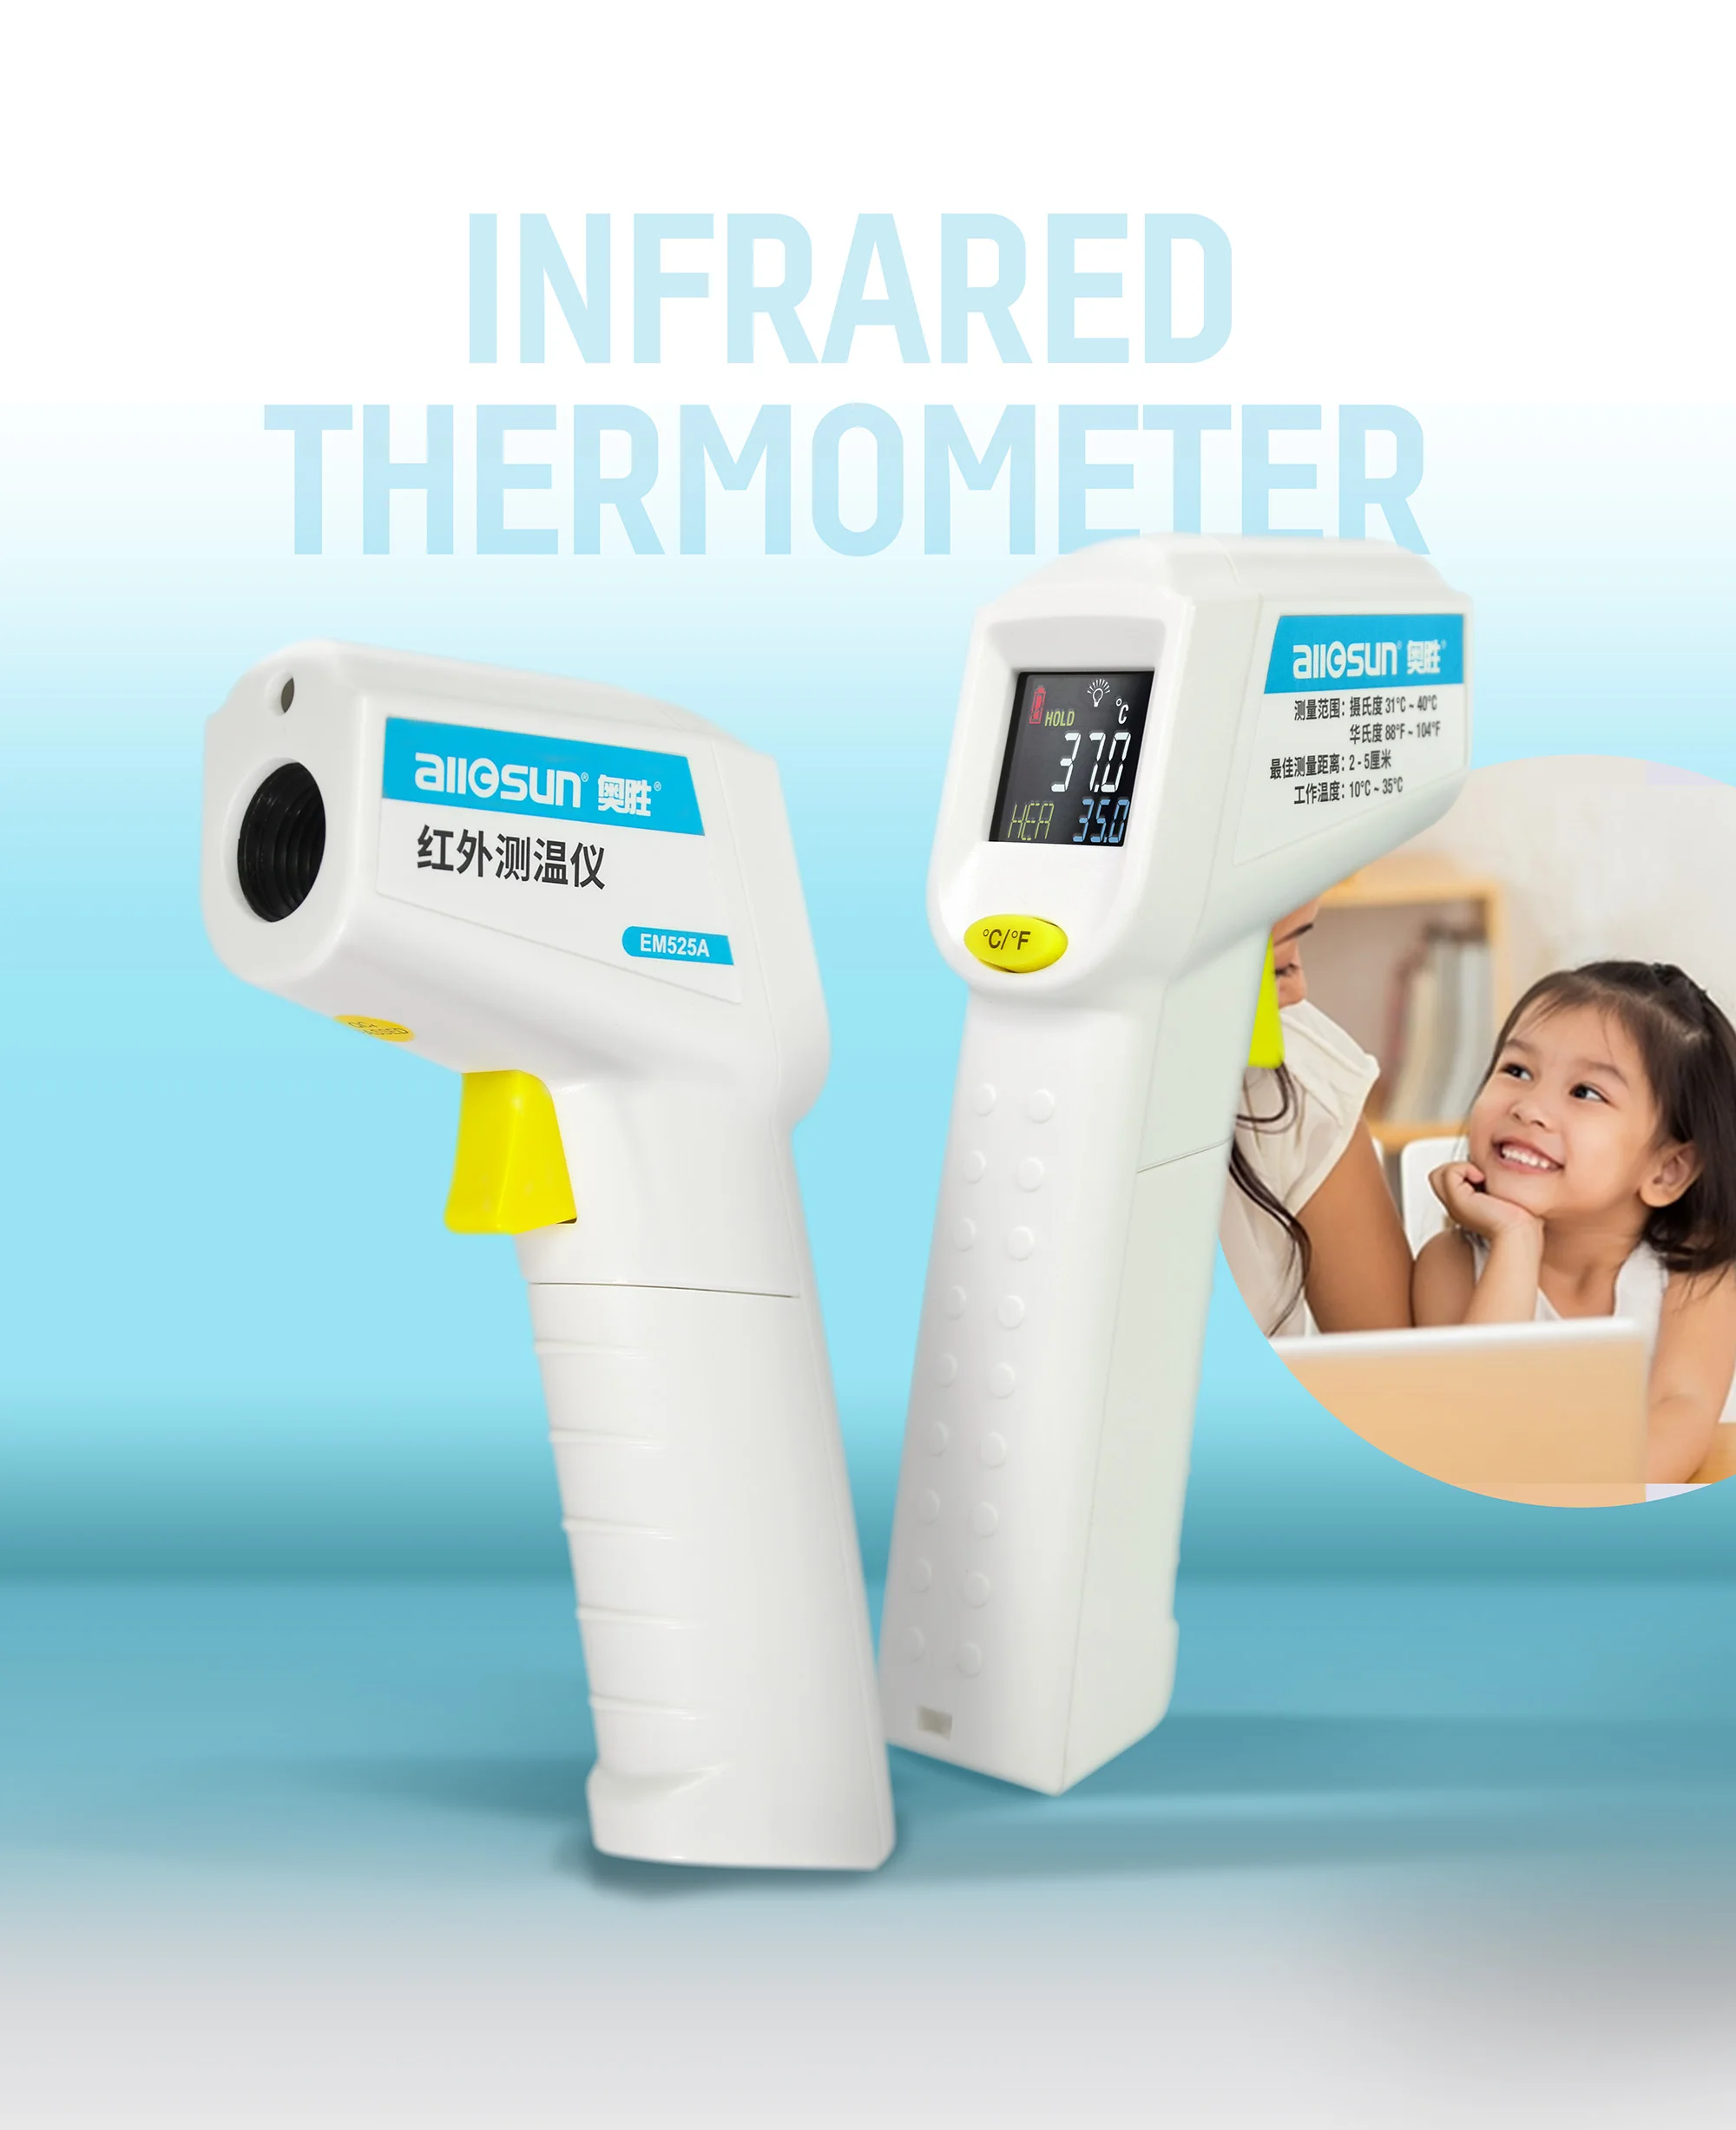 

all-sun Muti-fuction Baby/Adult Digital Termomete Infrared Forehead Body Thermometer Gun Non-contact Temperature Measurement